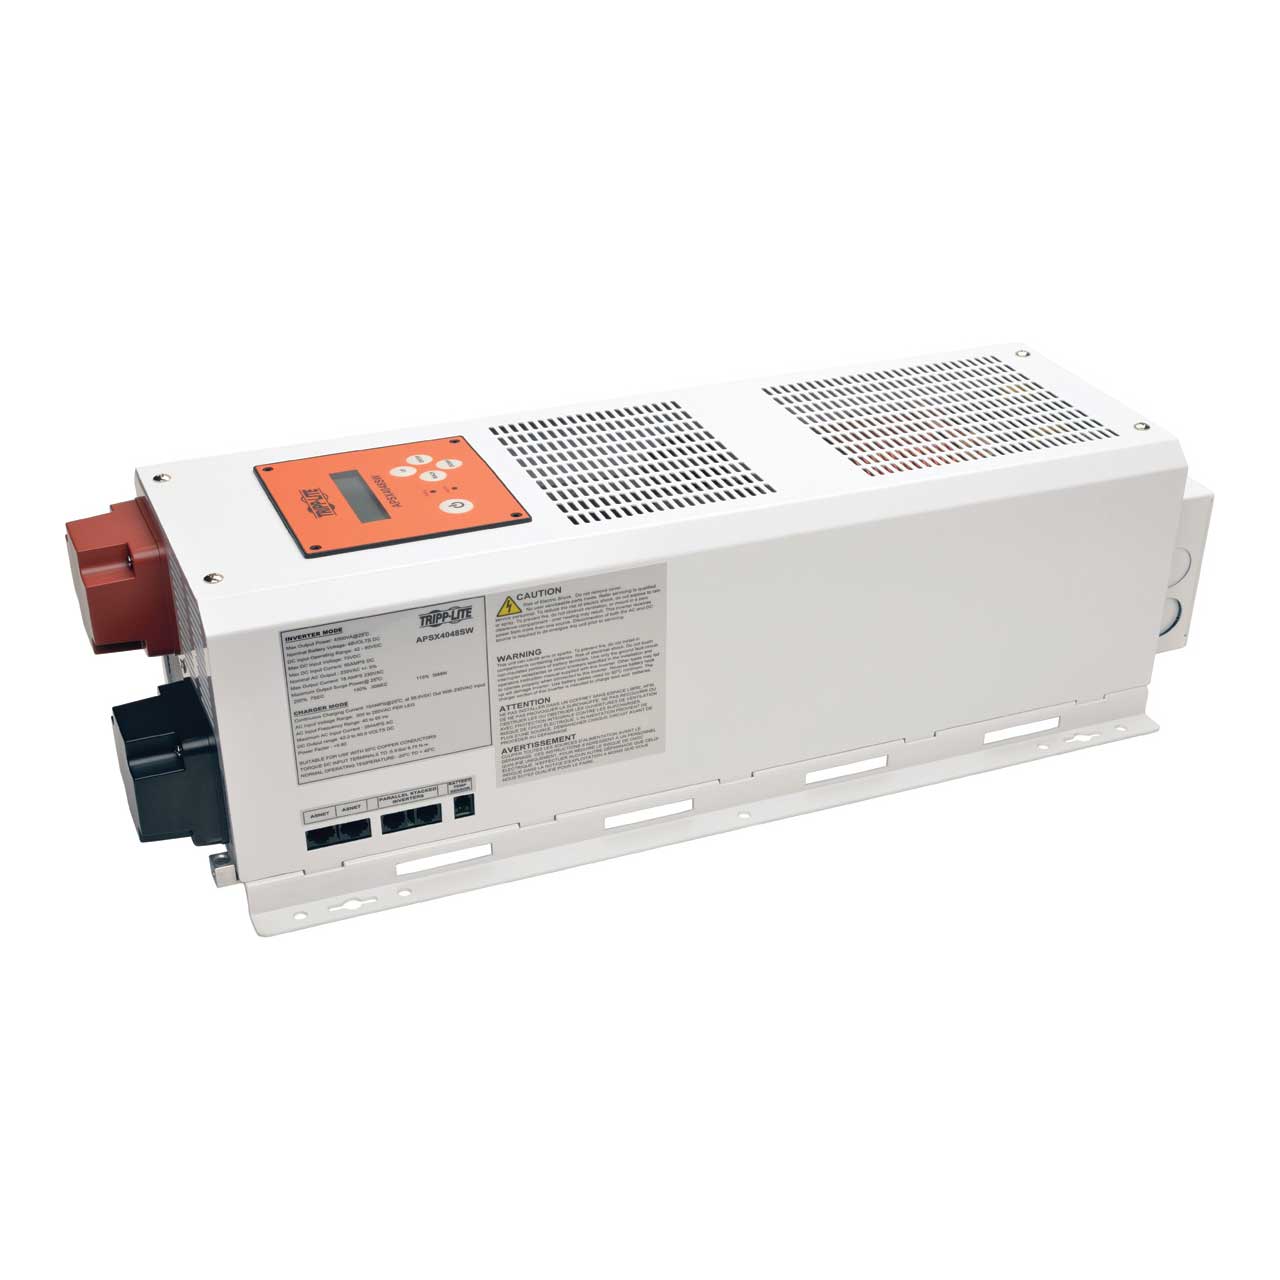 Portable DC to AC Inverter -12V to 230V